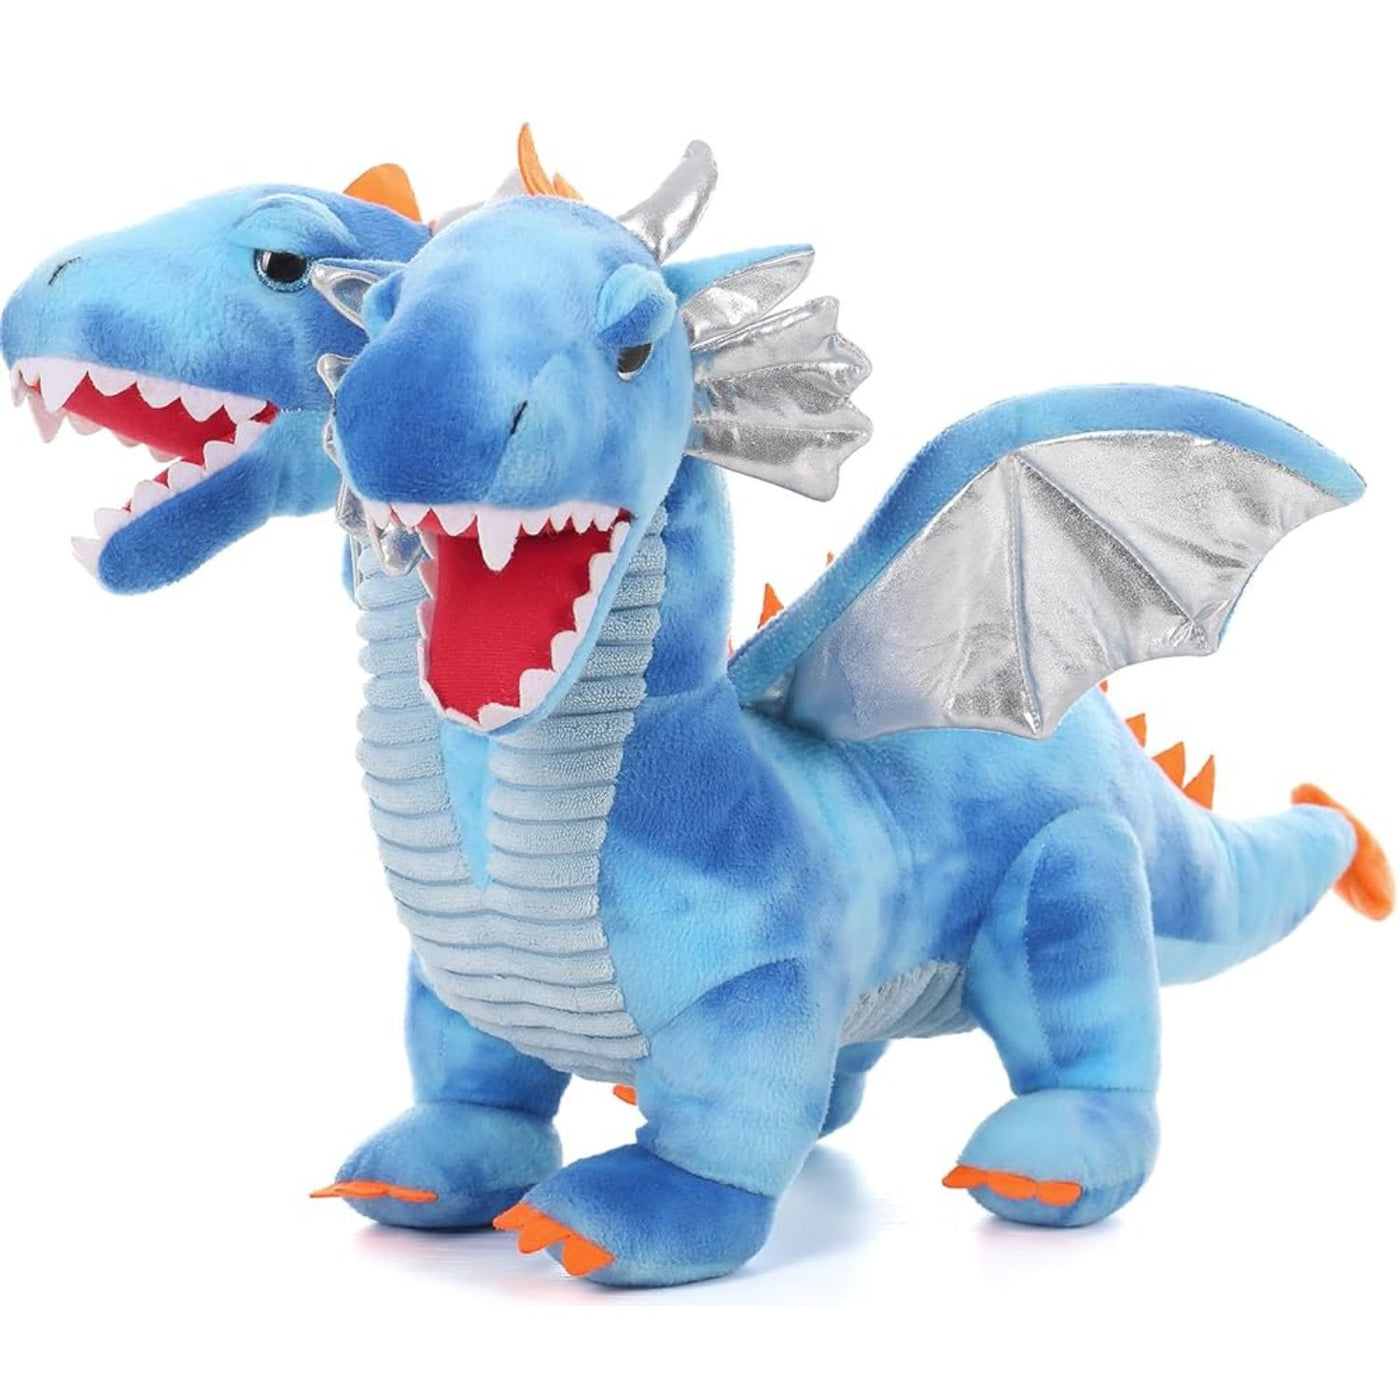 Double-headed Dragon Plush Toy, 23.6 Inches - MorisMos Stuffed Animals